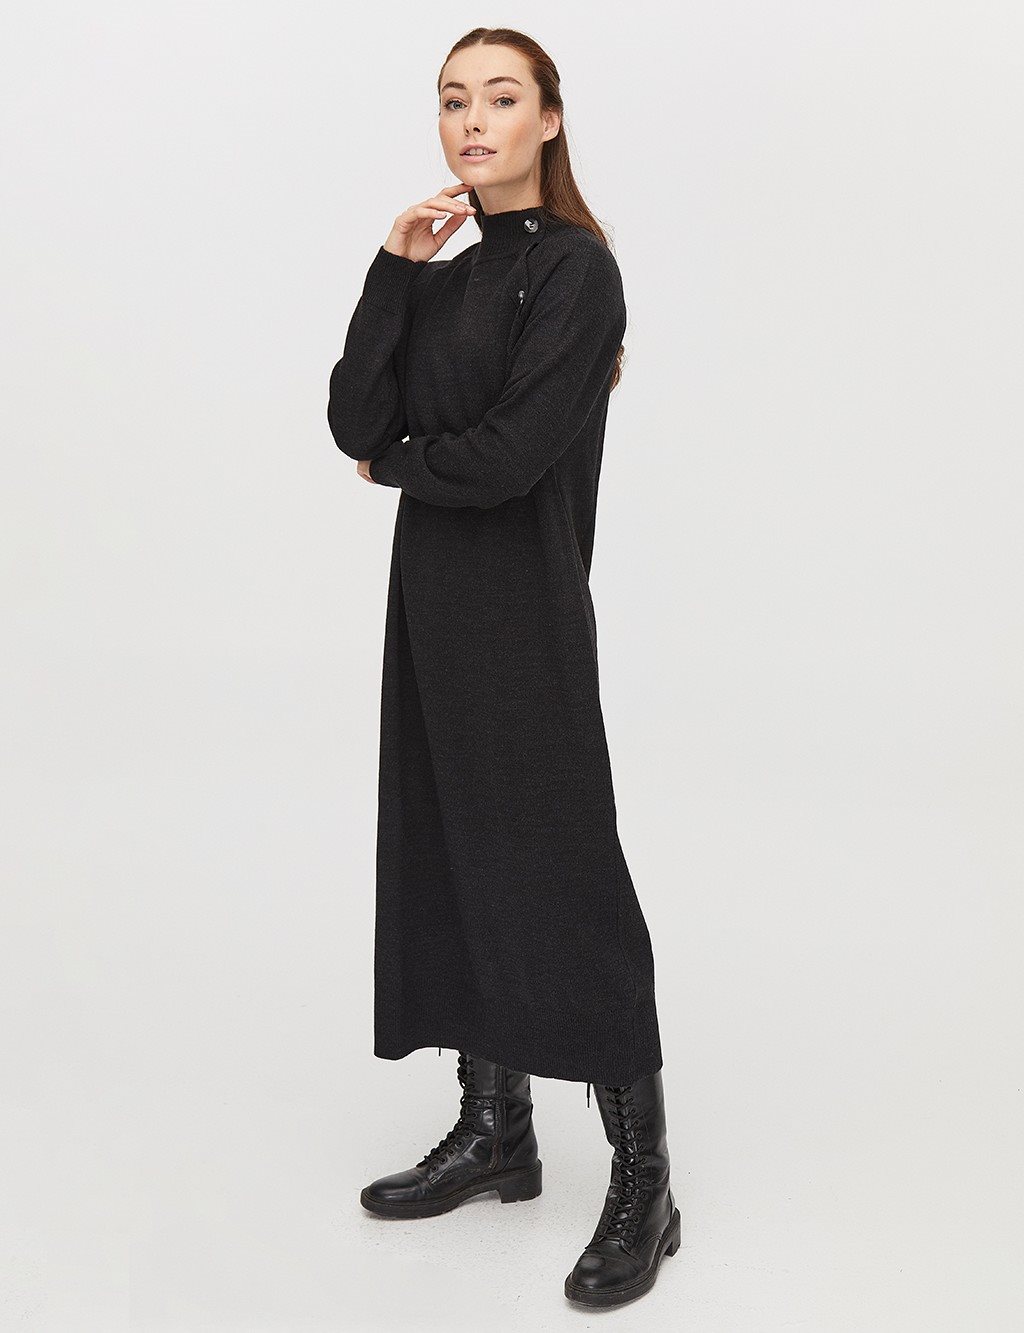 Raglan Sleeve Half Turtleneck Knitwear Dress Black